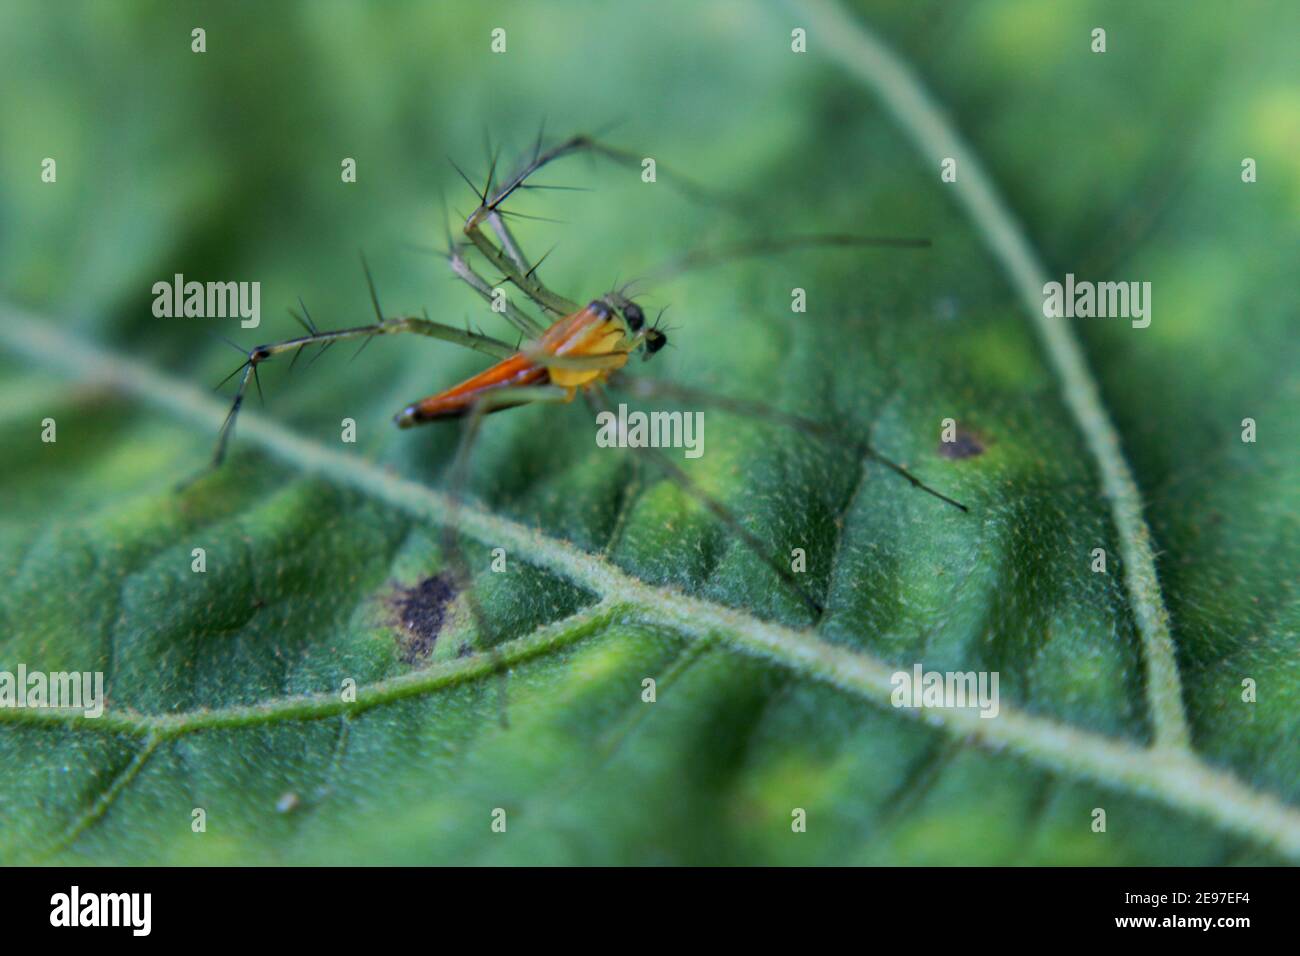 a  small spider (arachnid) on a leaf Stock Photo